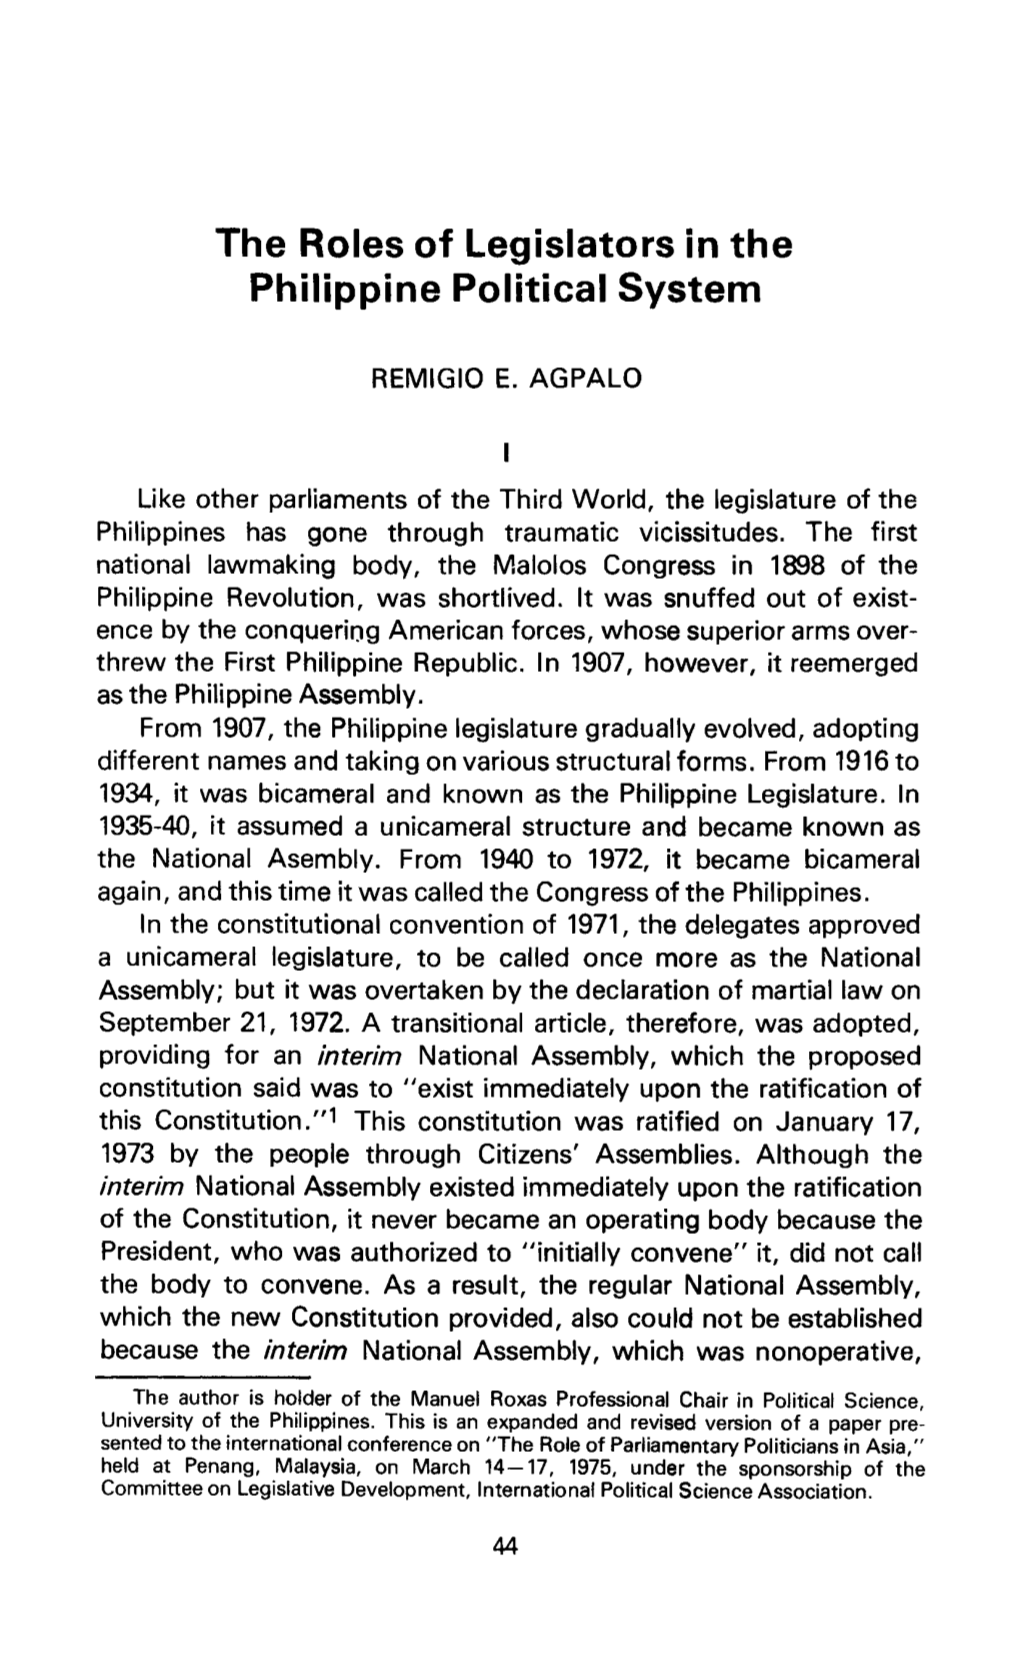 The Roles of Legislators in the Philippine Political System